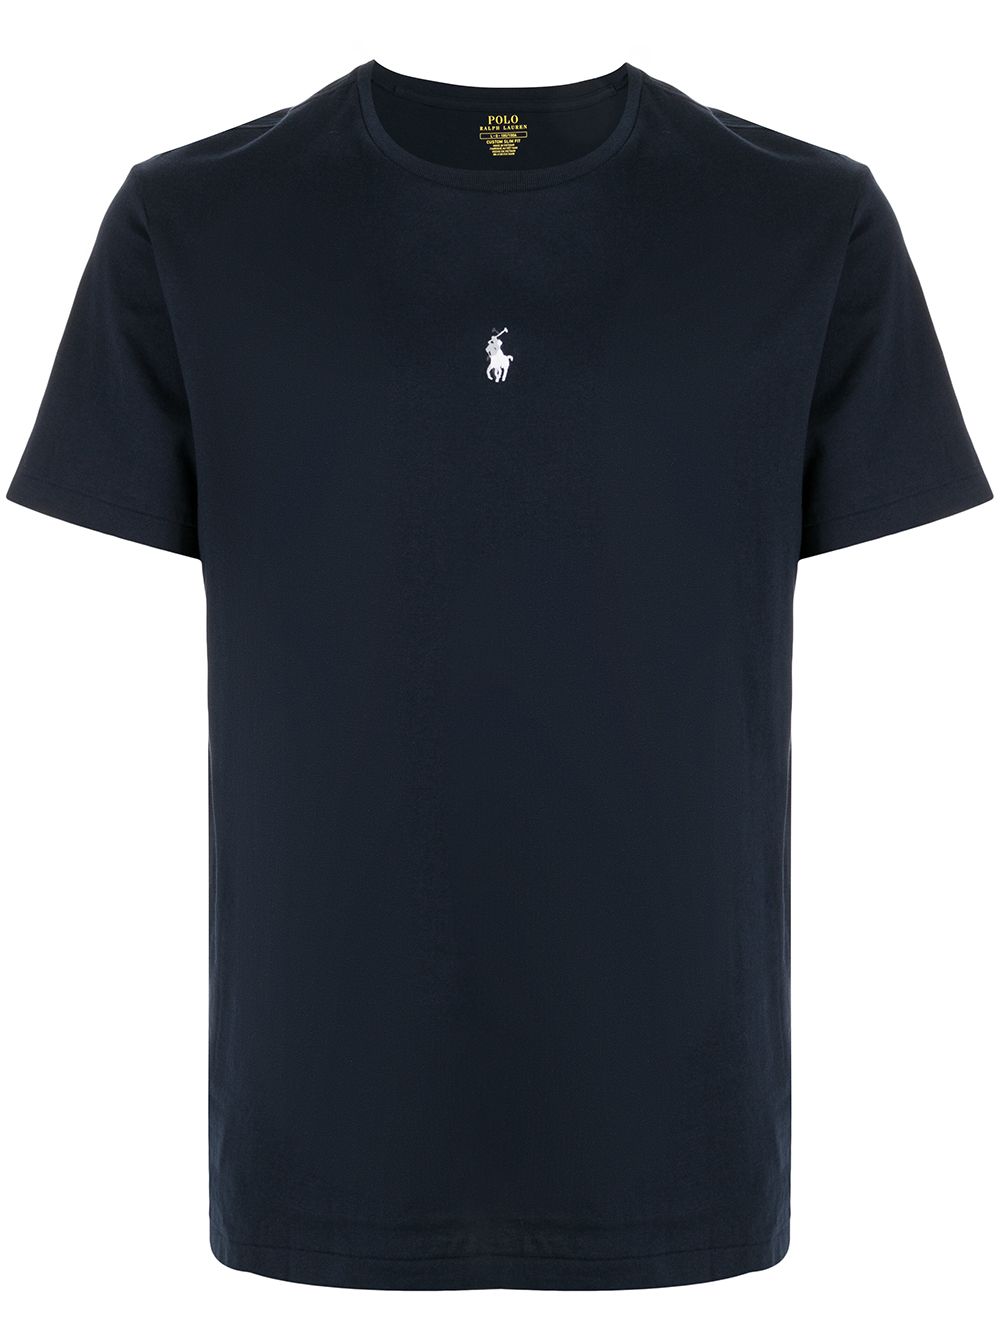 t-shirt blu con logo centrale